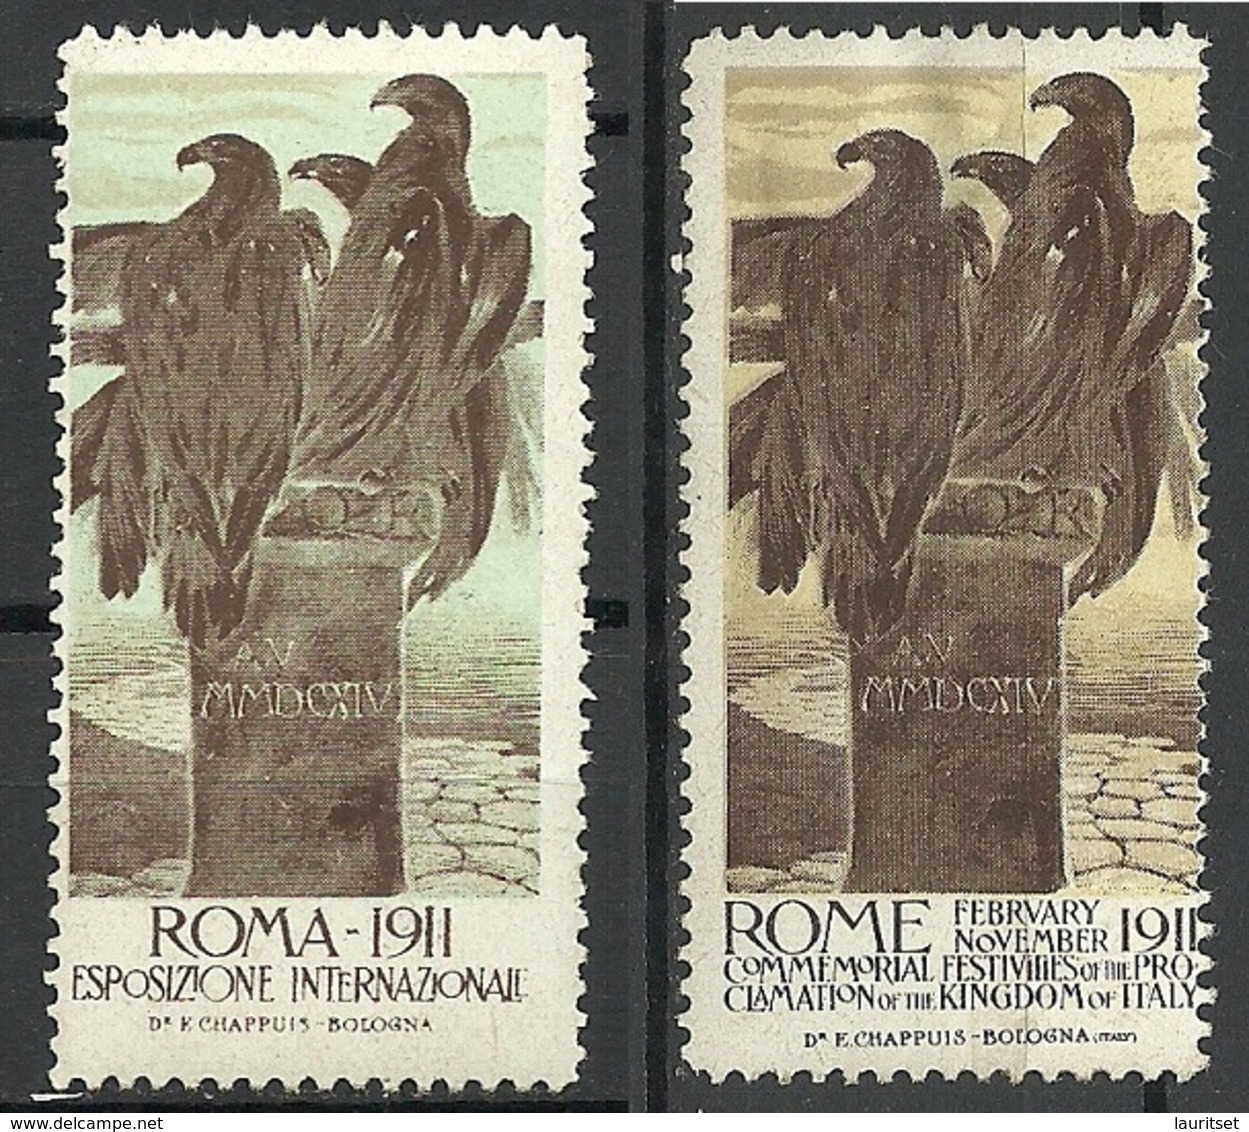 ITALY 1911 Esposizione Internazional EXPO Advertising Poster Stamps * - Erinnofilia